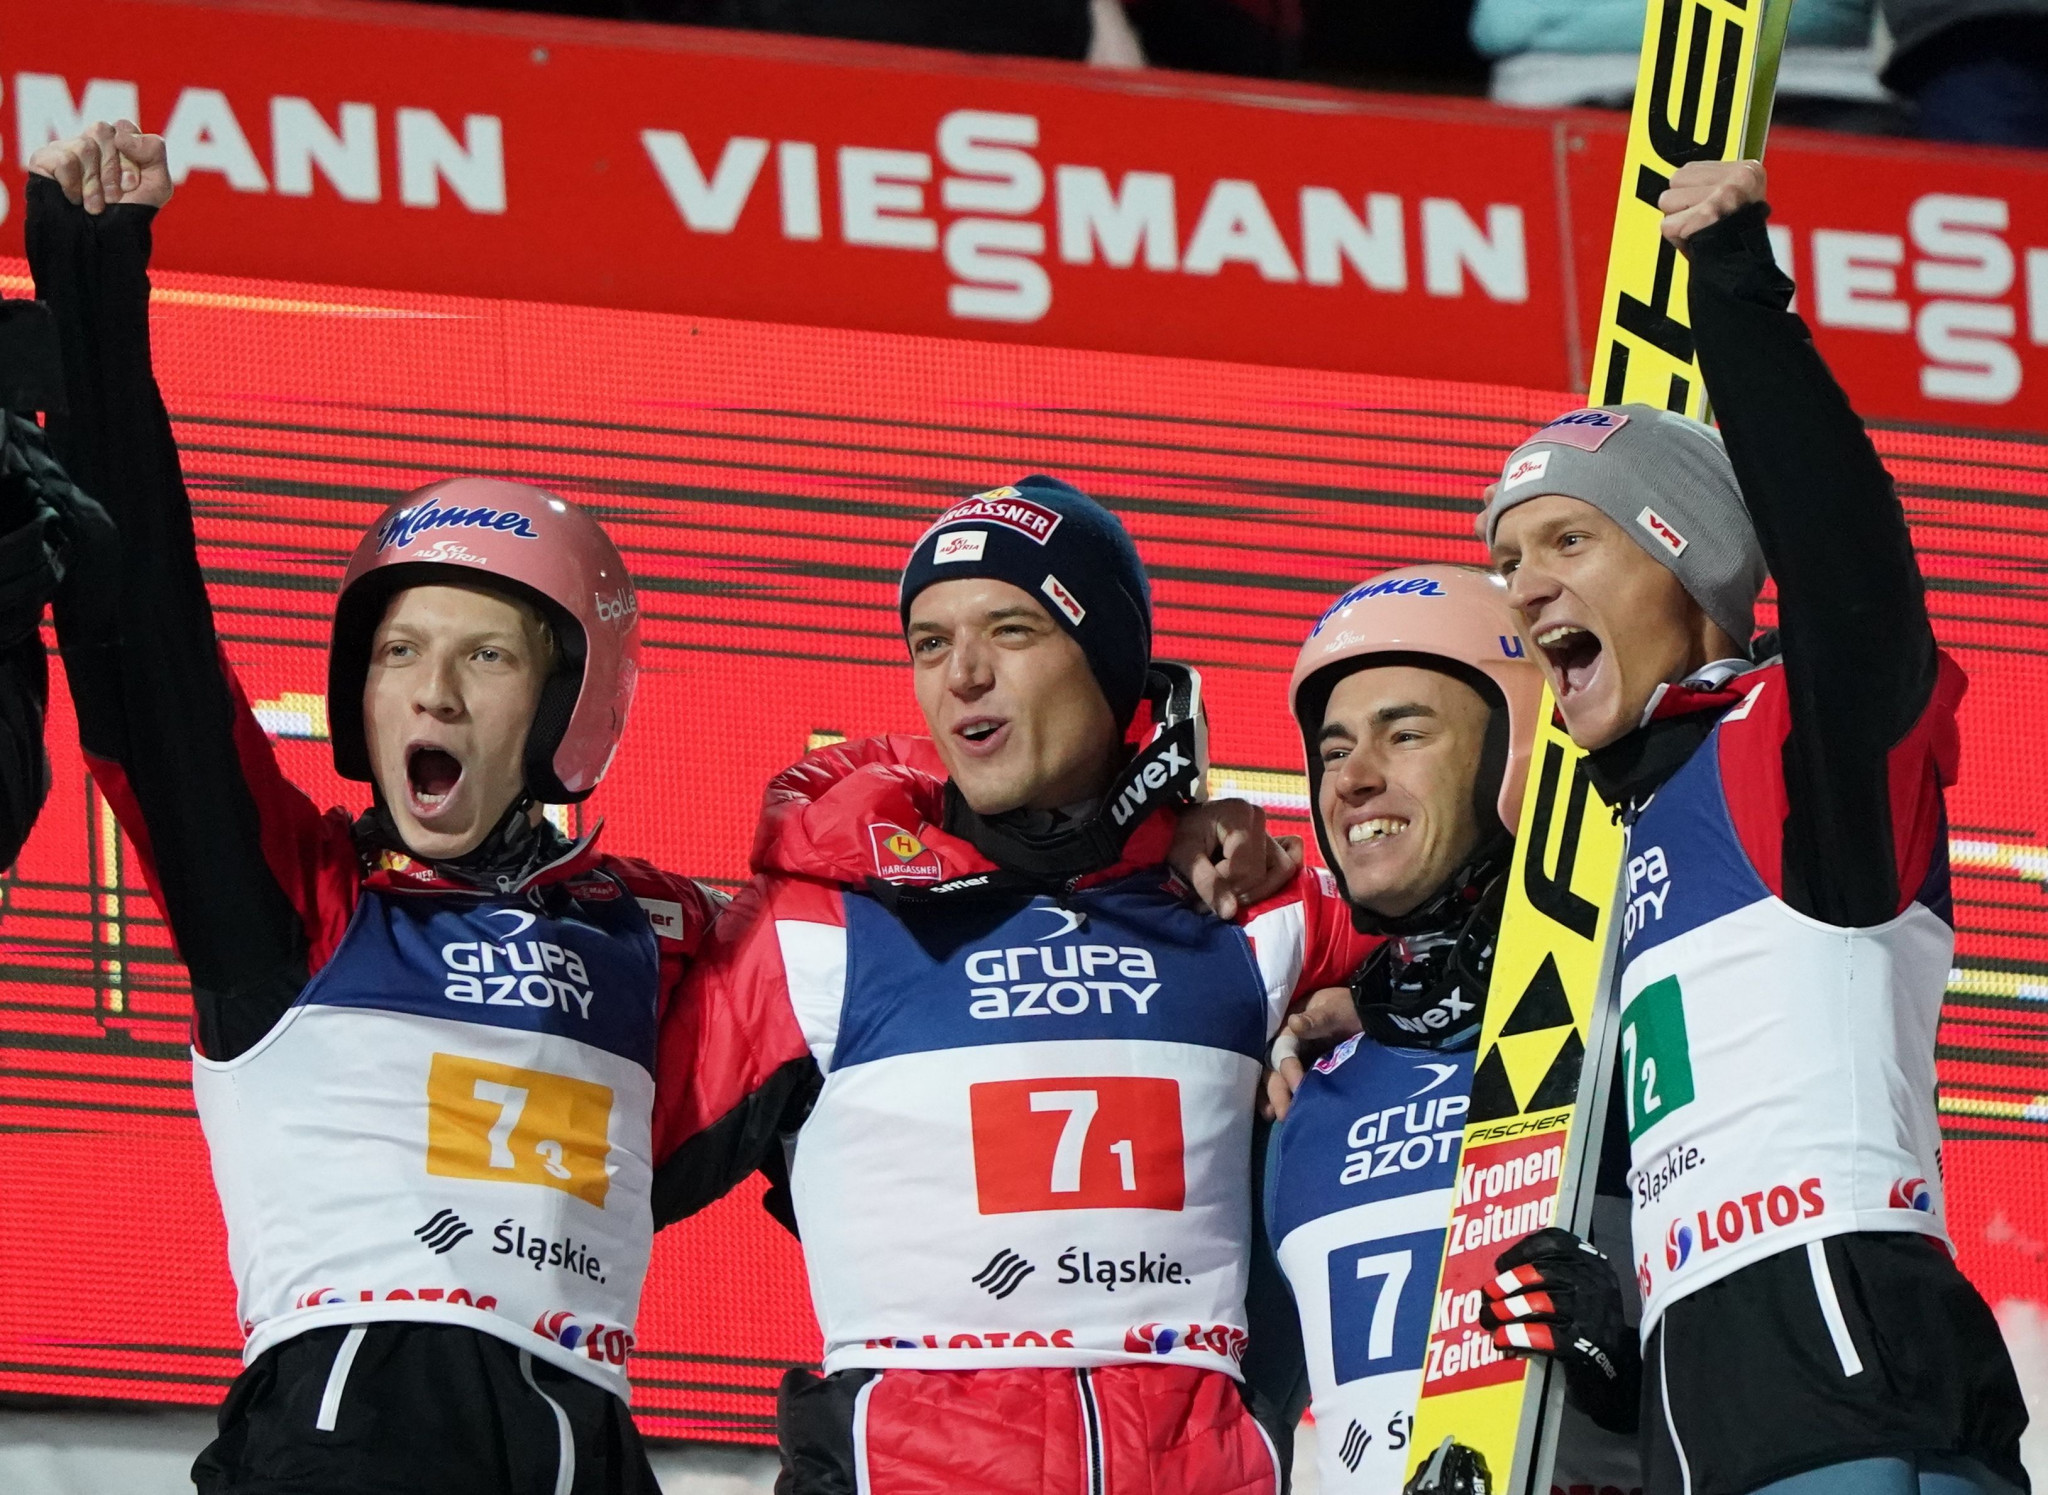 Austria win team event as FIS Ski Jumping World Cup season begins